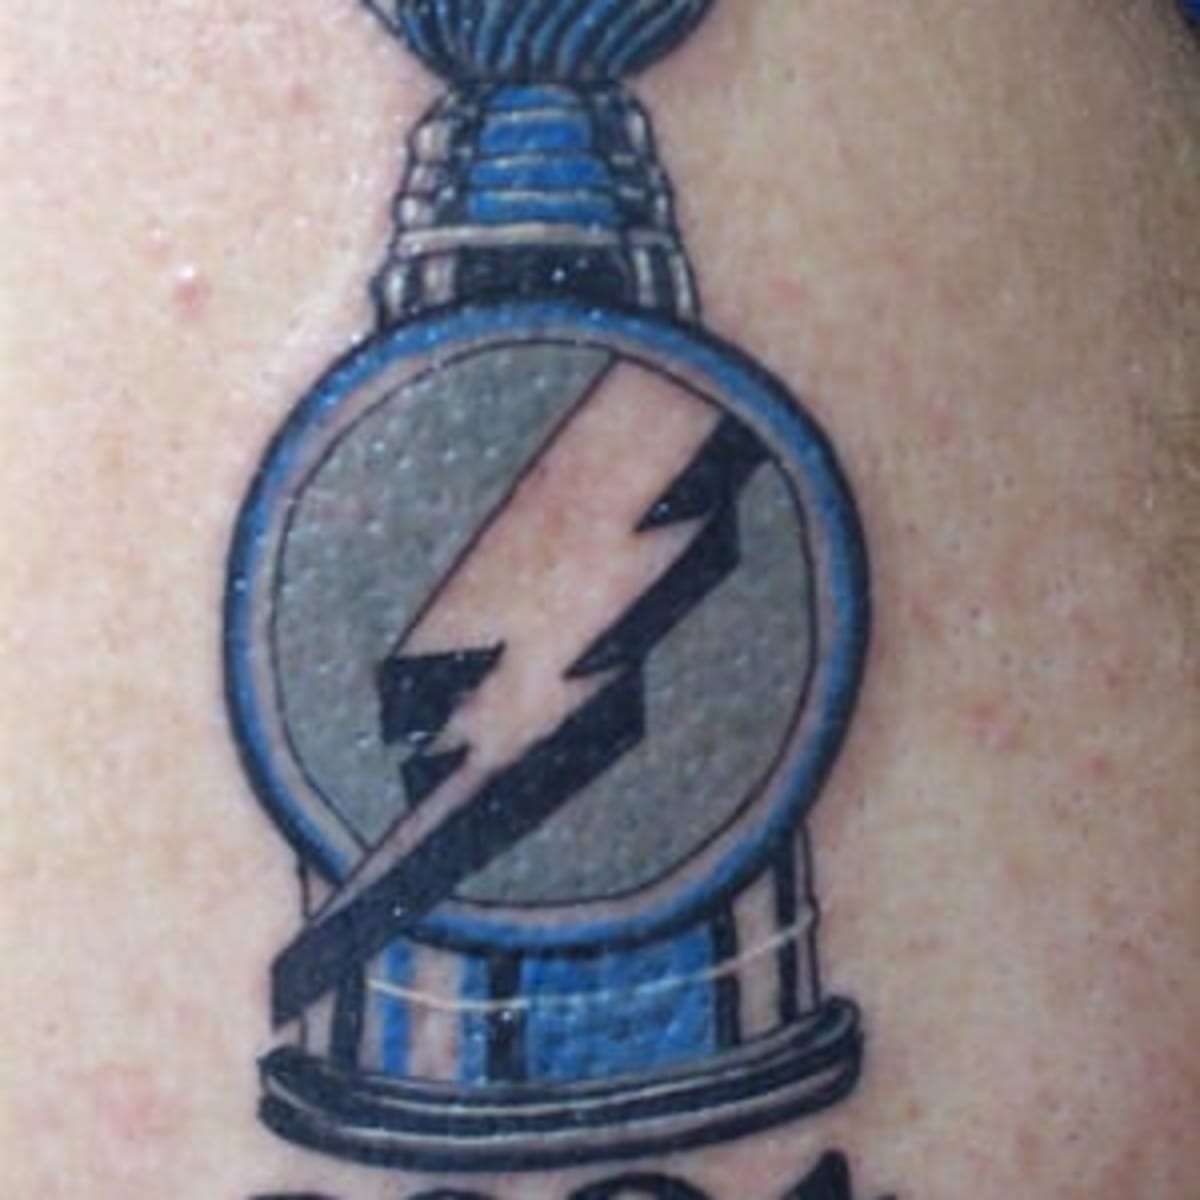 Tampa Bay Lightning Tattoos - The Hockey News